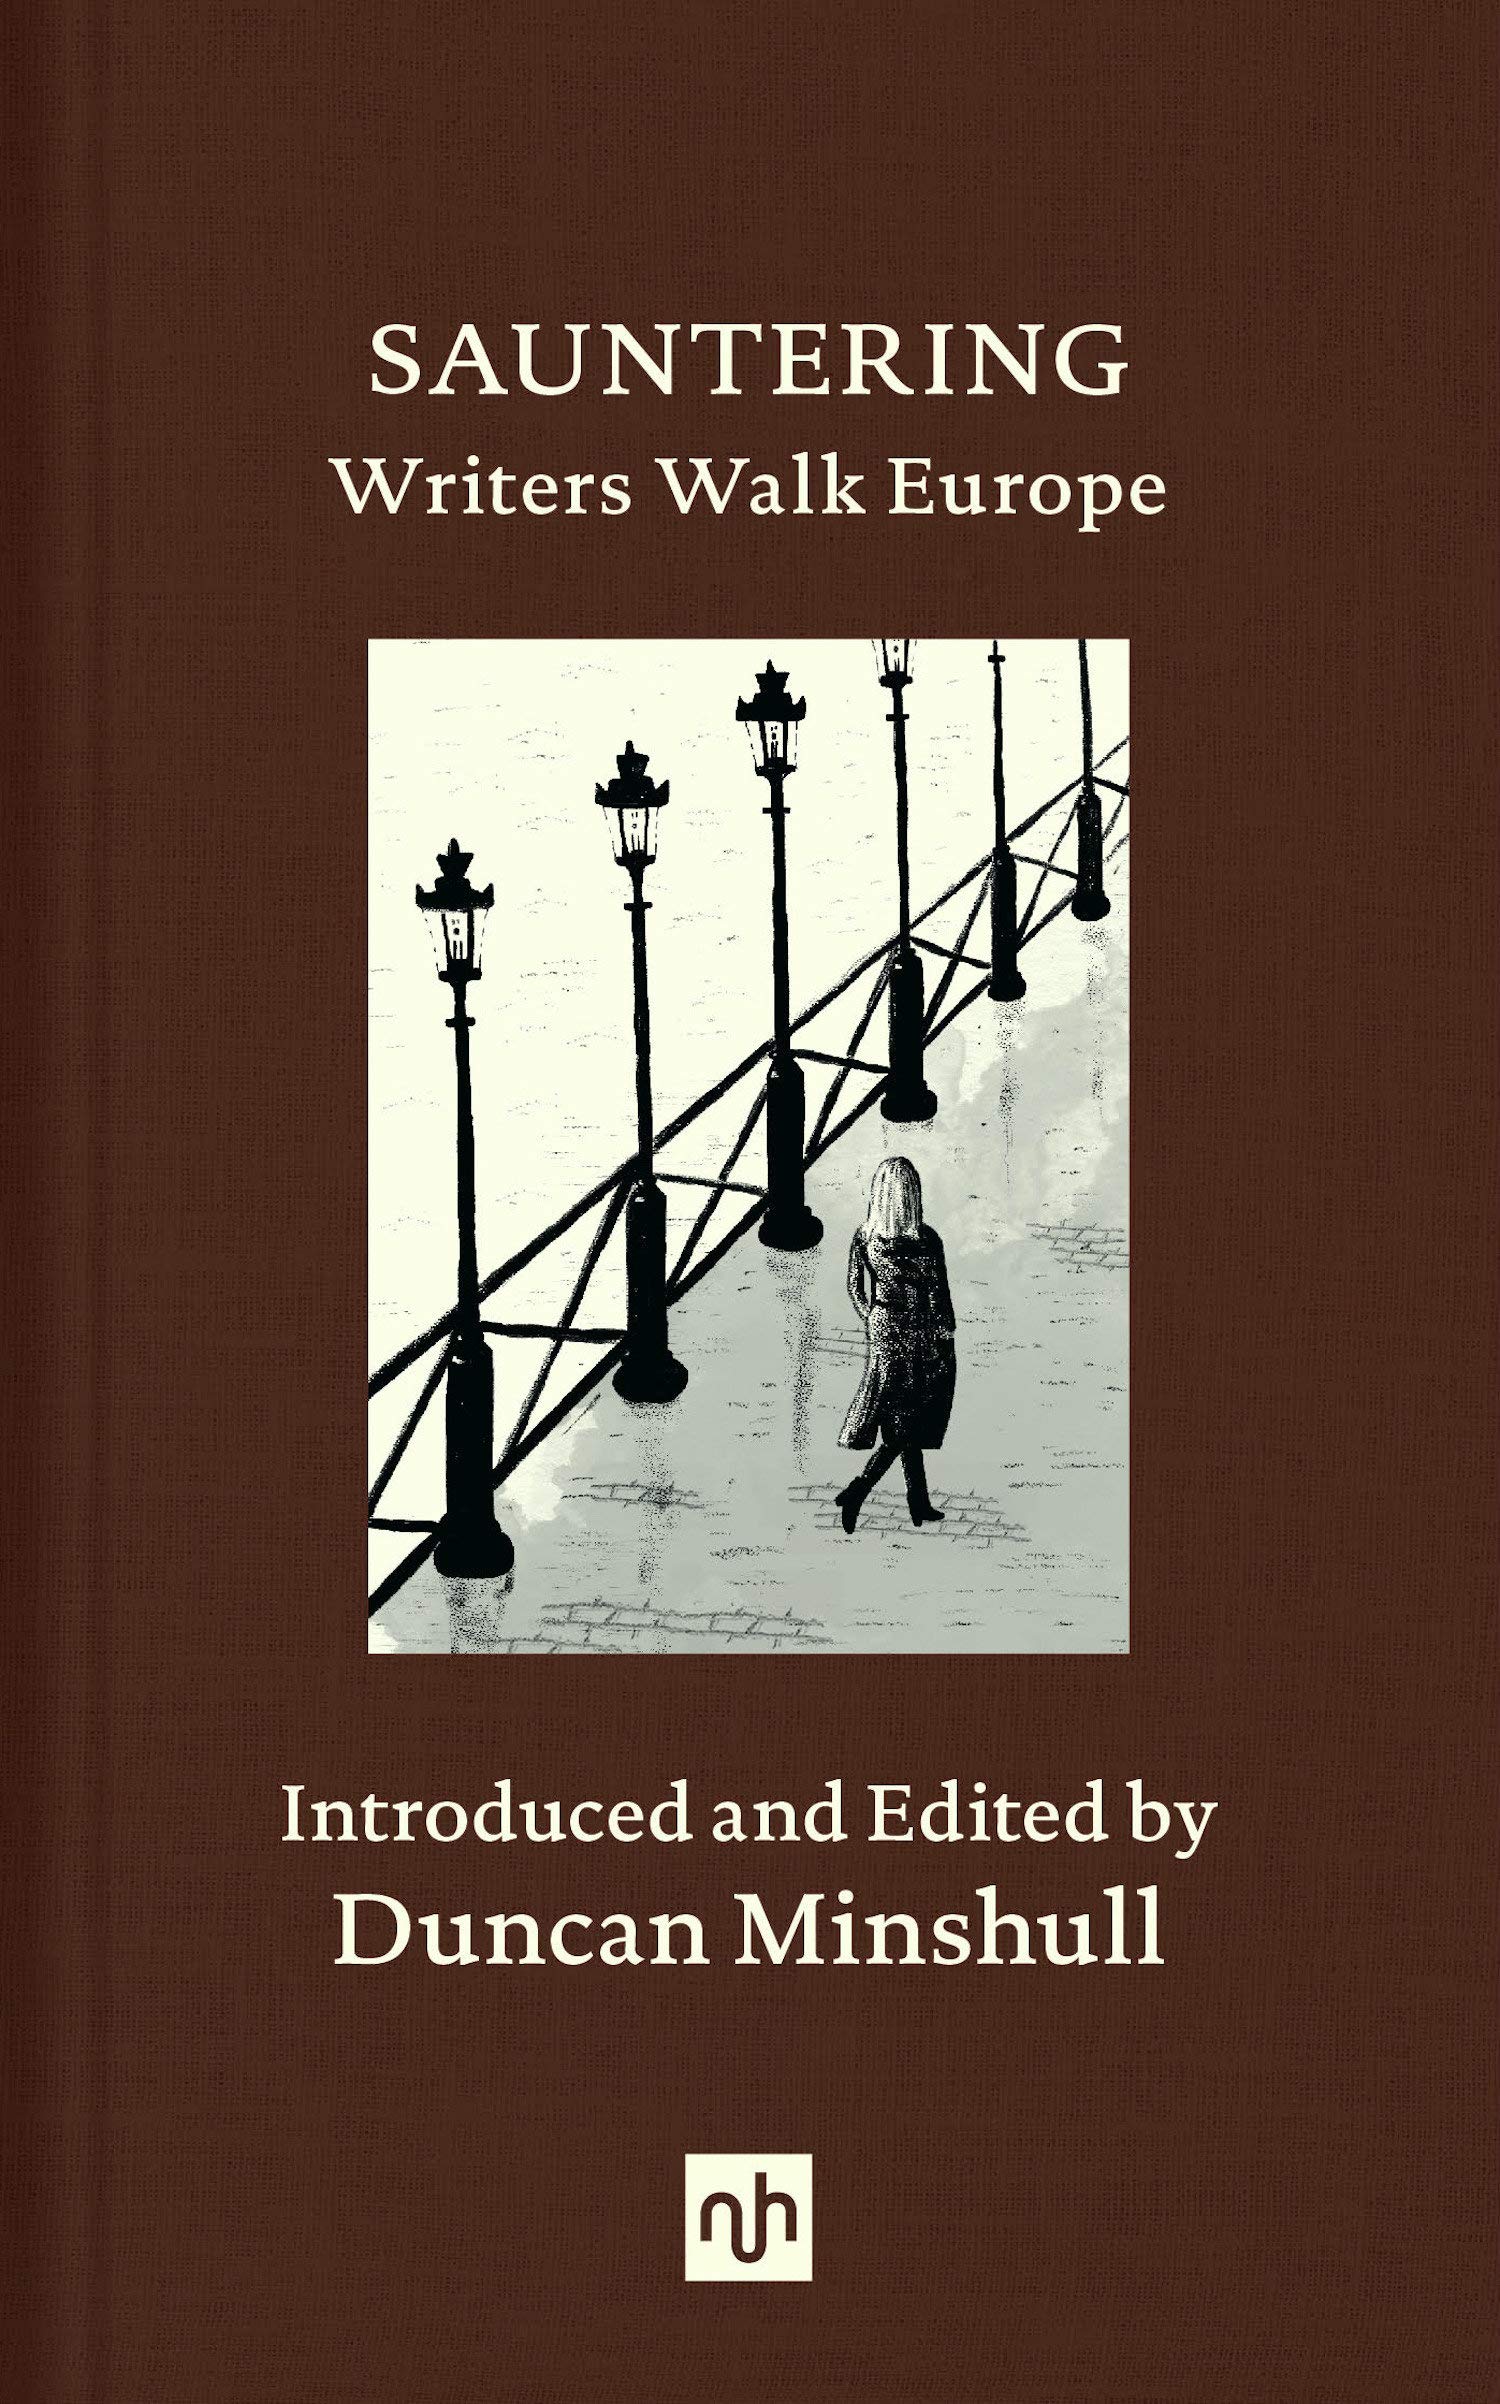 Sauntering: Writers Walk Europe